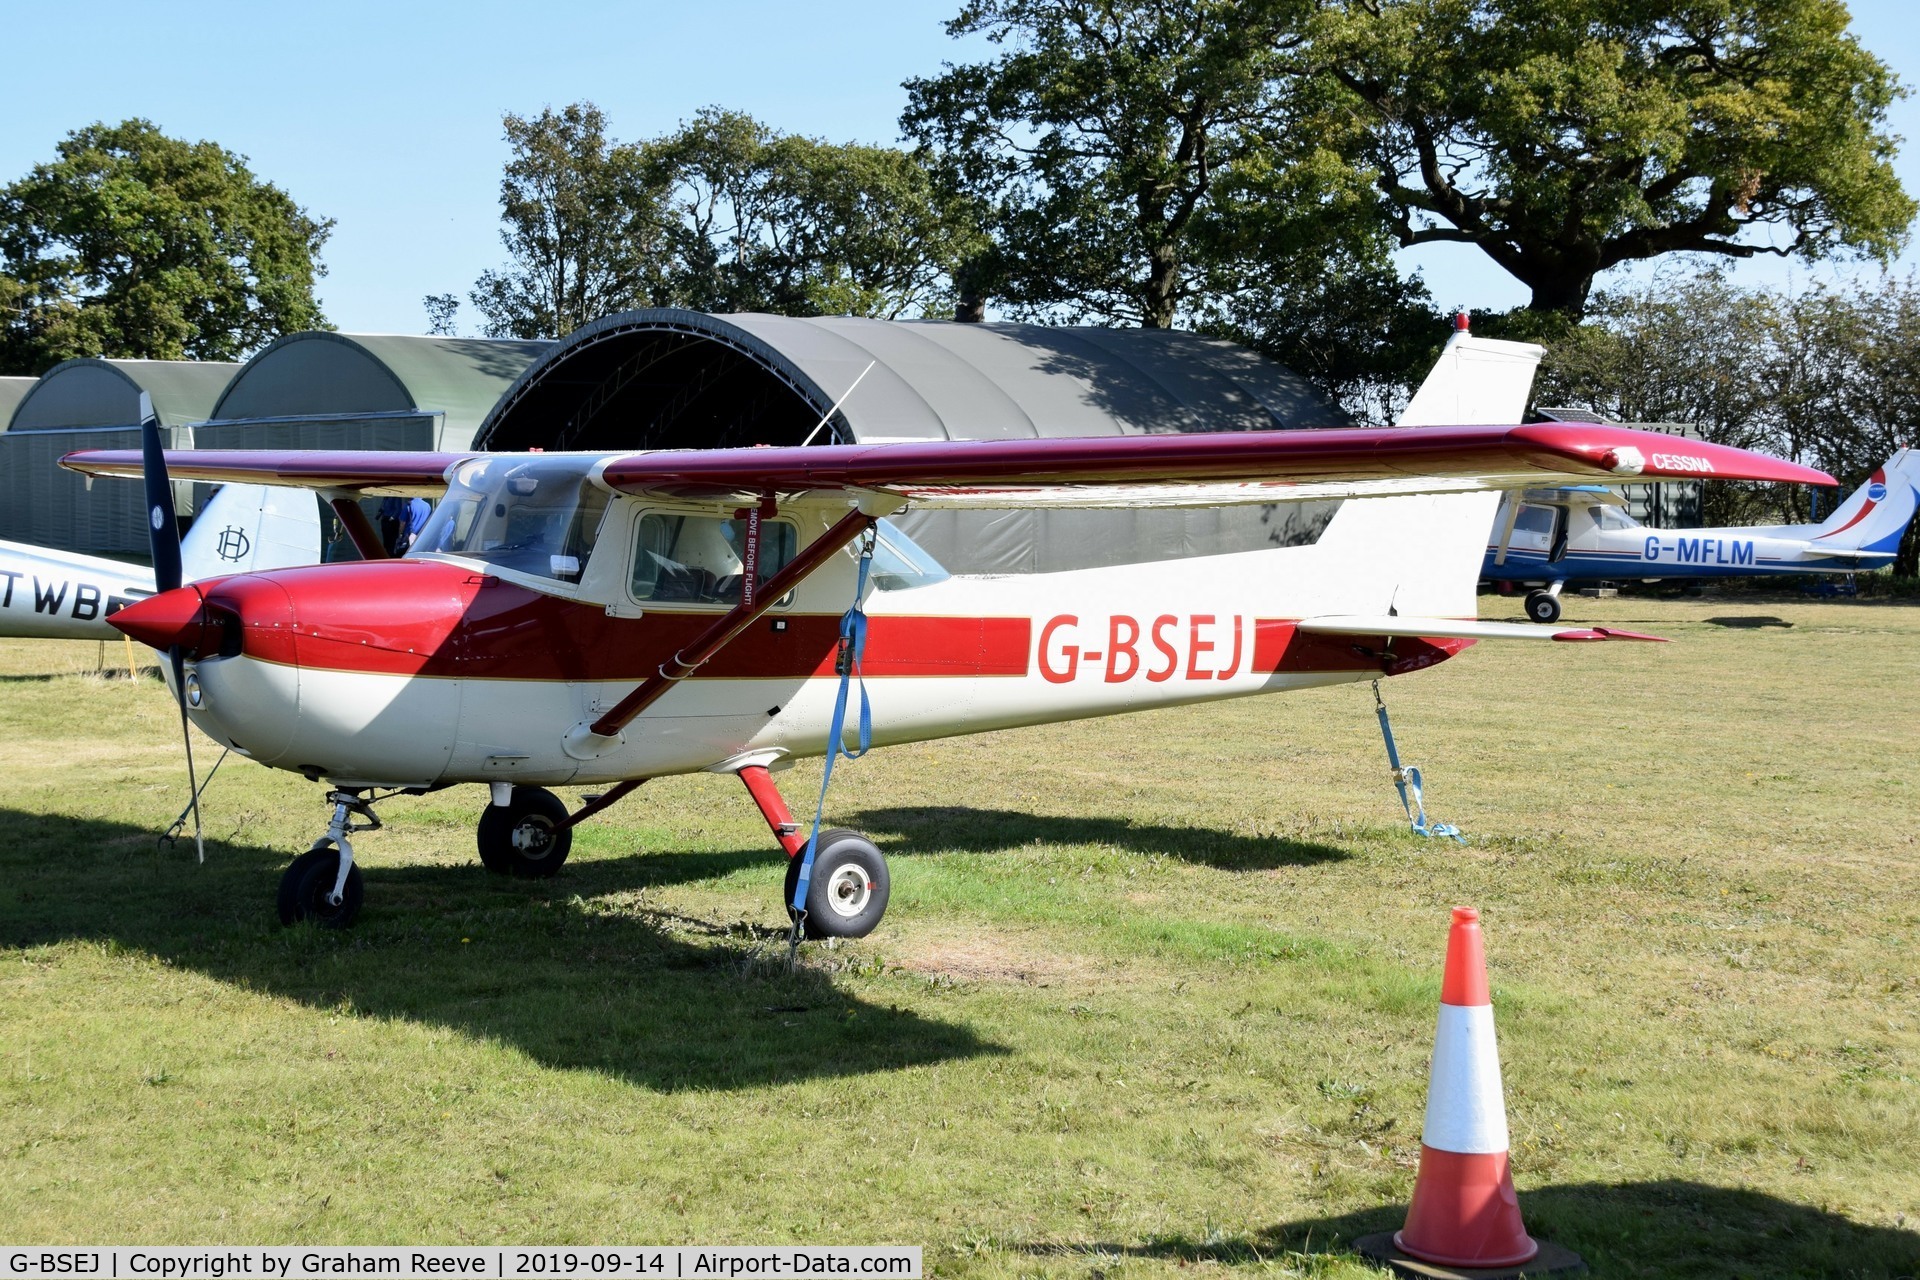 G-BSEJ, 1974 Cessna 150M C/N 150-76261, Parked at, Bury St Edmunds, Rougham Airfield, UK.